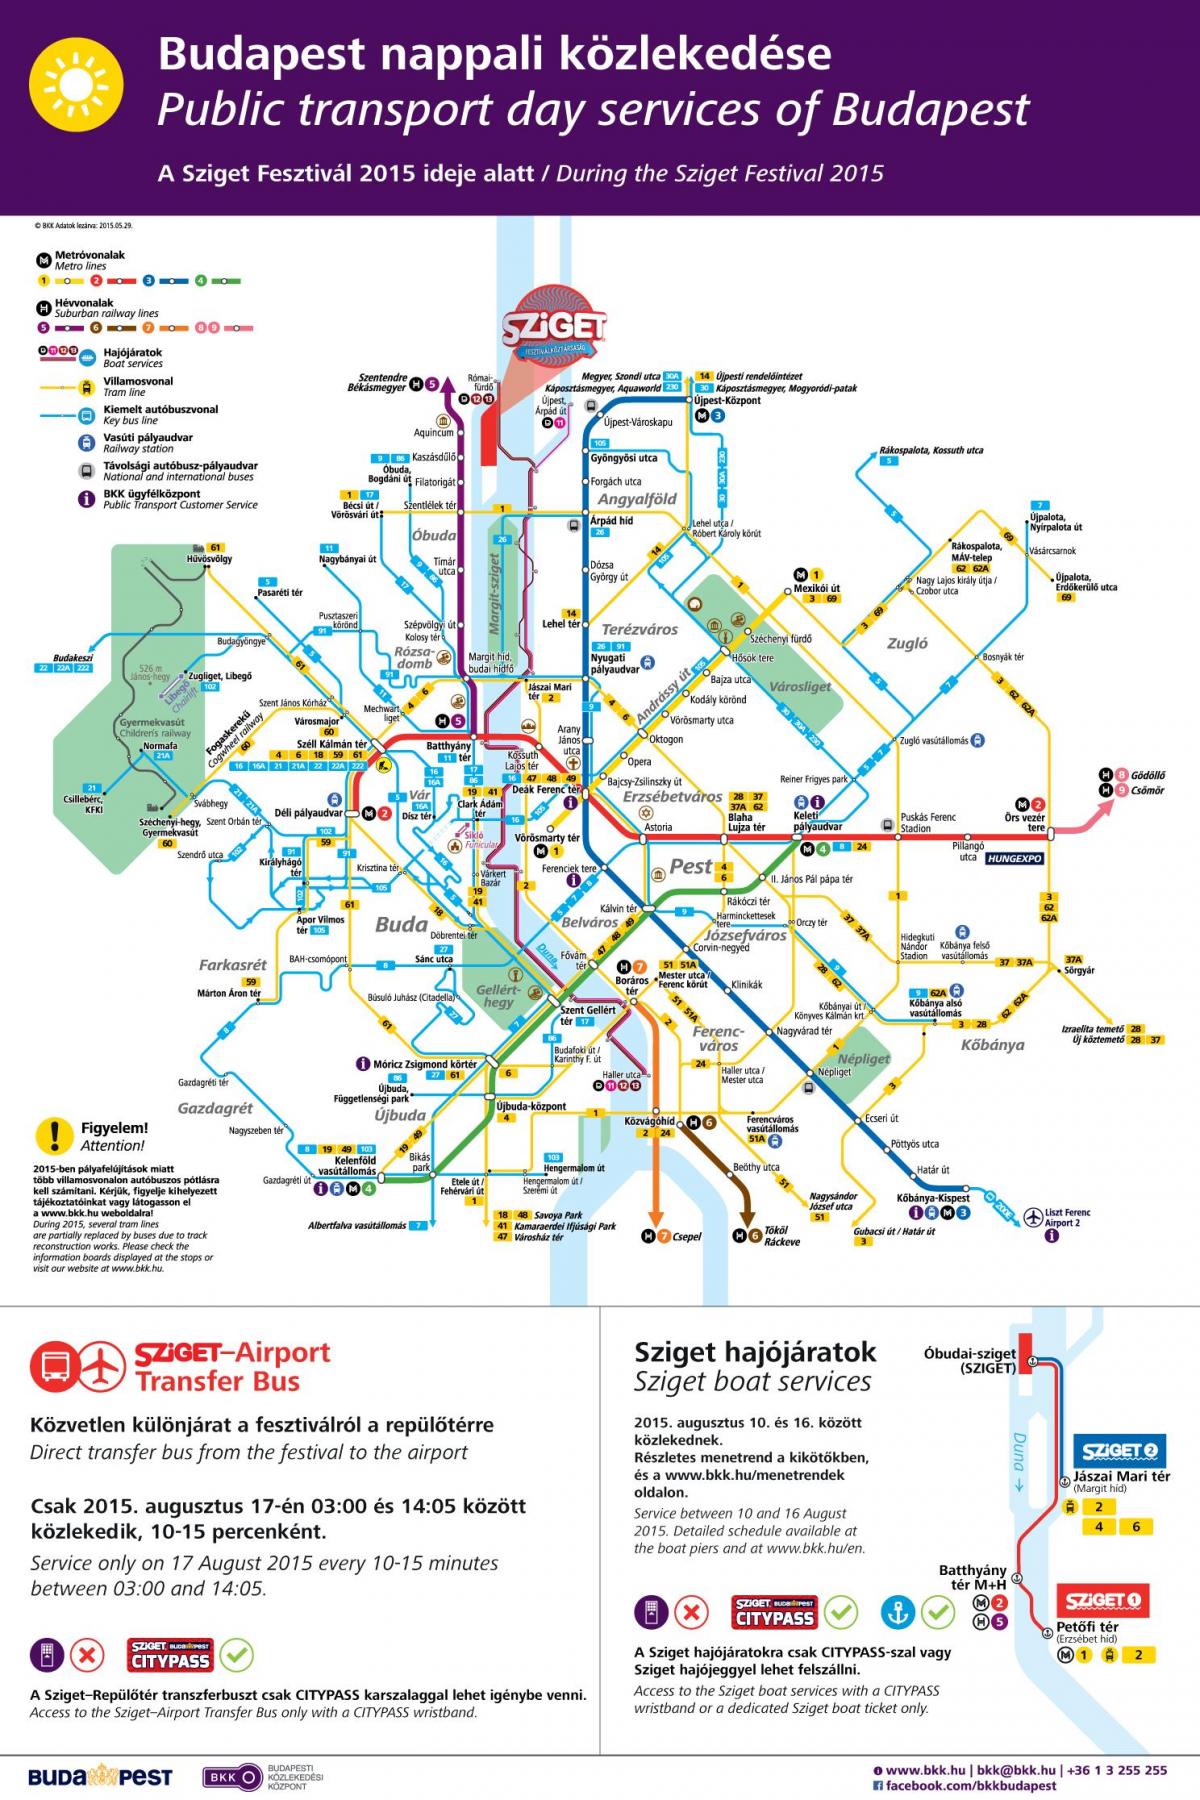 будимпешта streetcar мапа